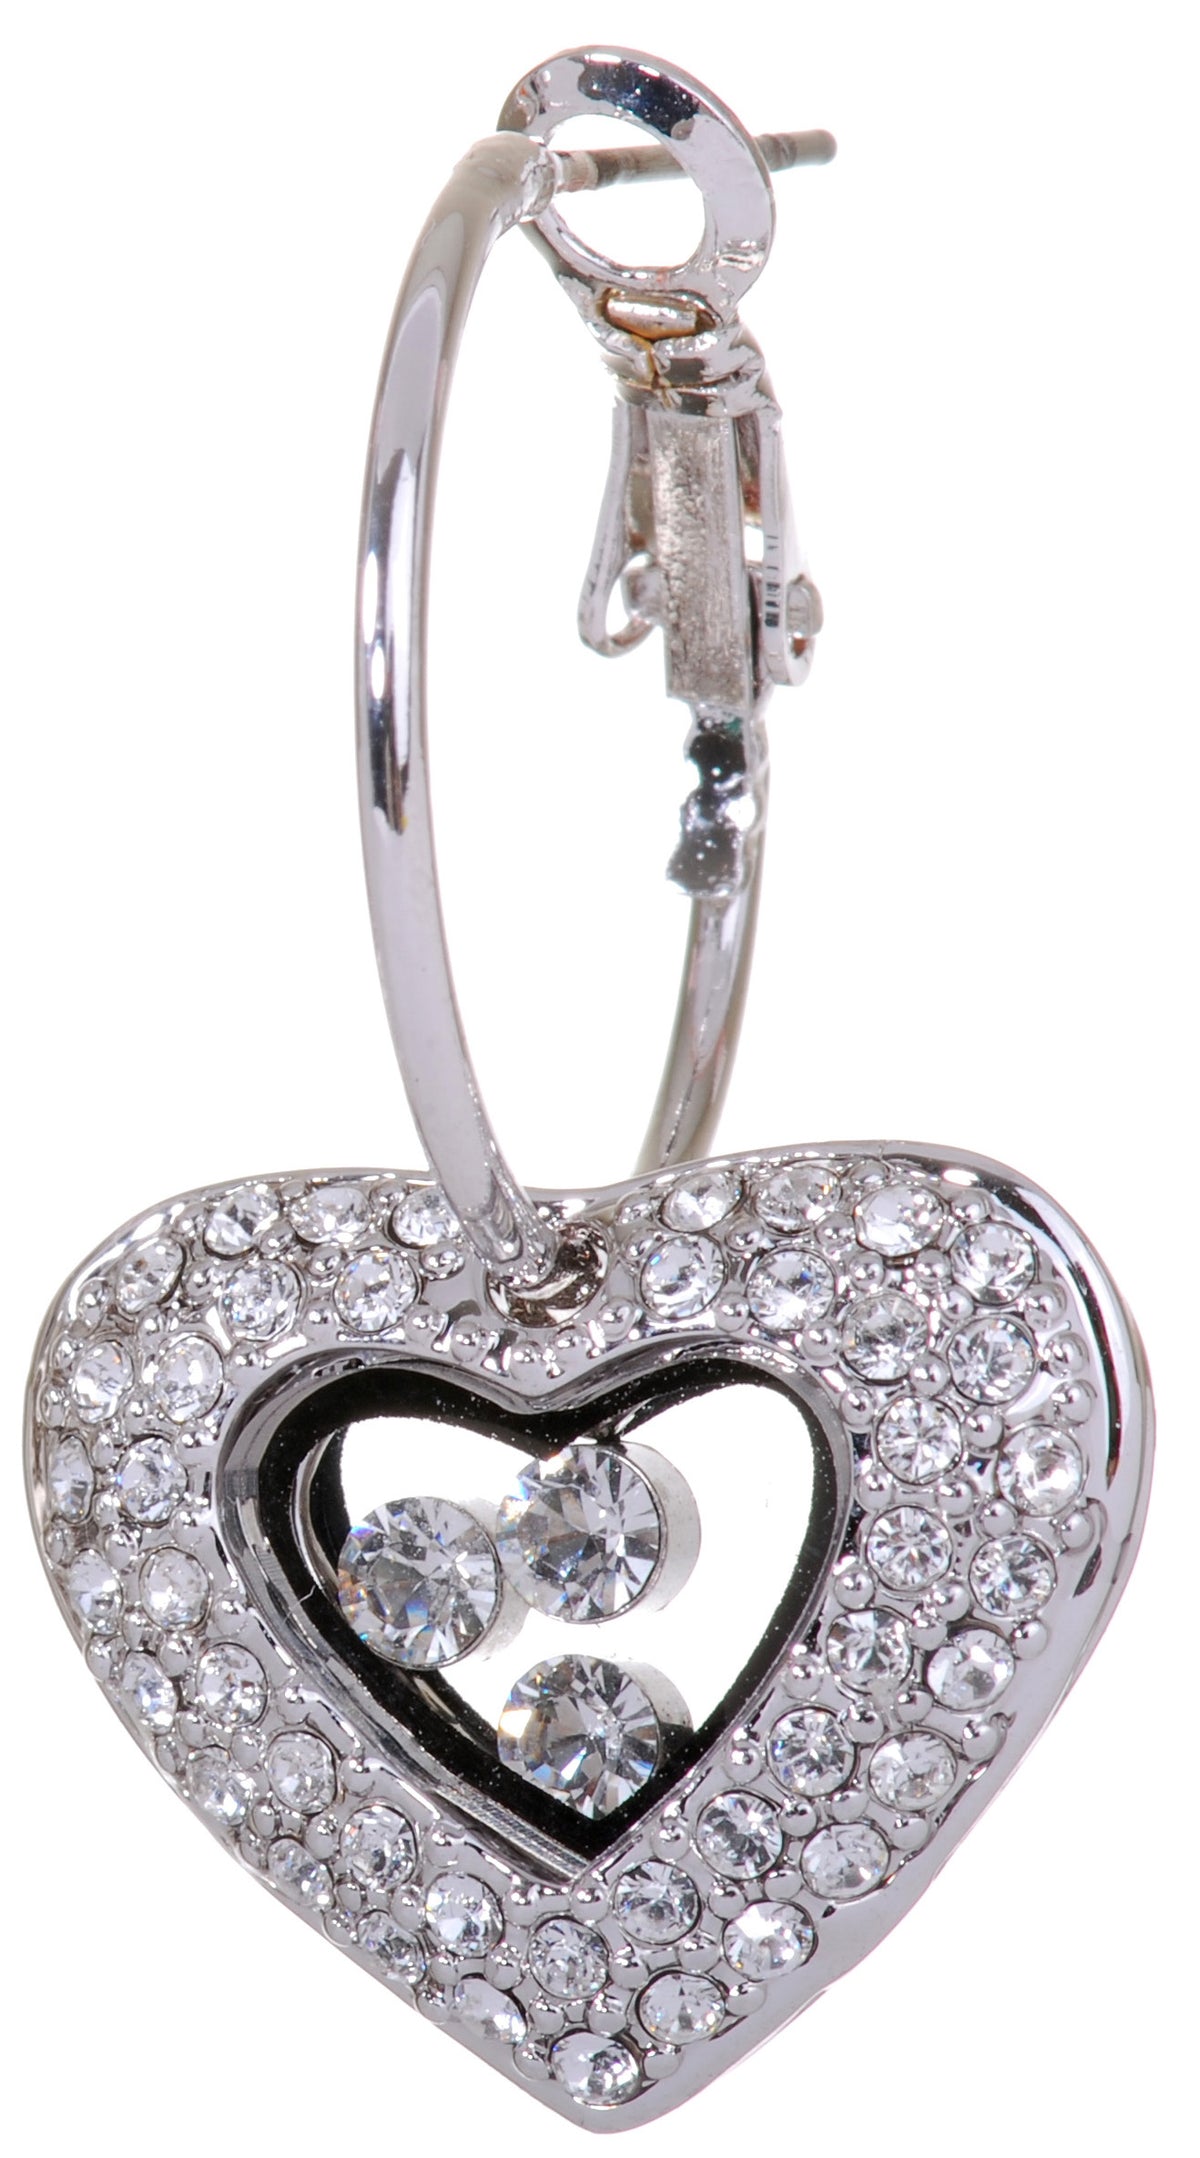 E7104 Rhodium Swarovski Elements Heart Box Earrings